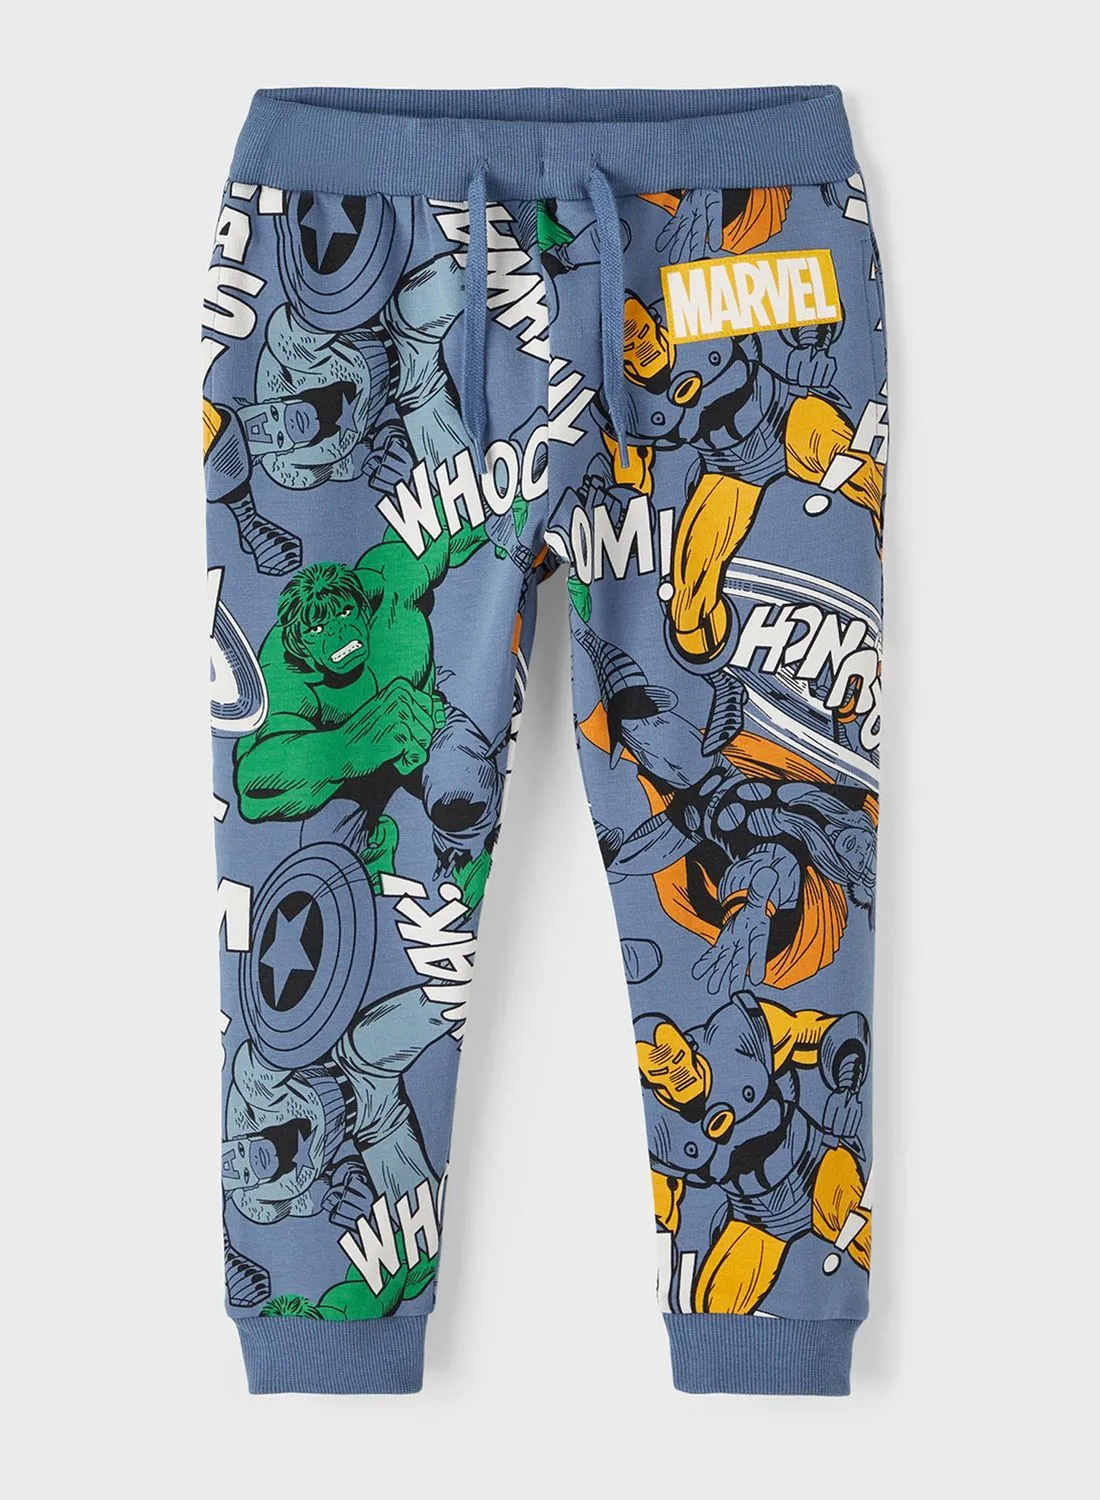 NAME IT Kids Marvel Print Sweatpants